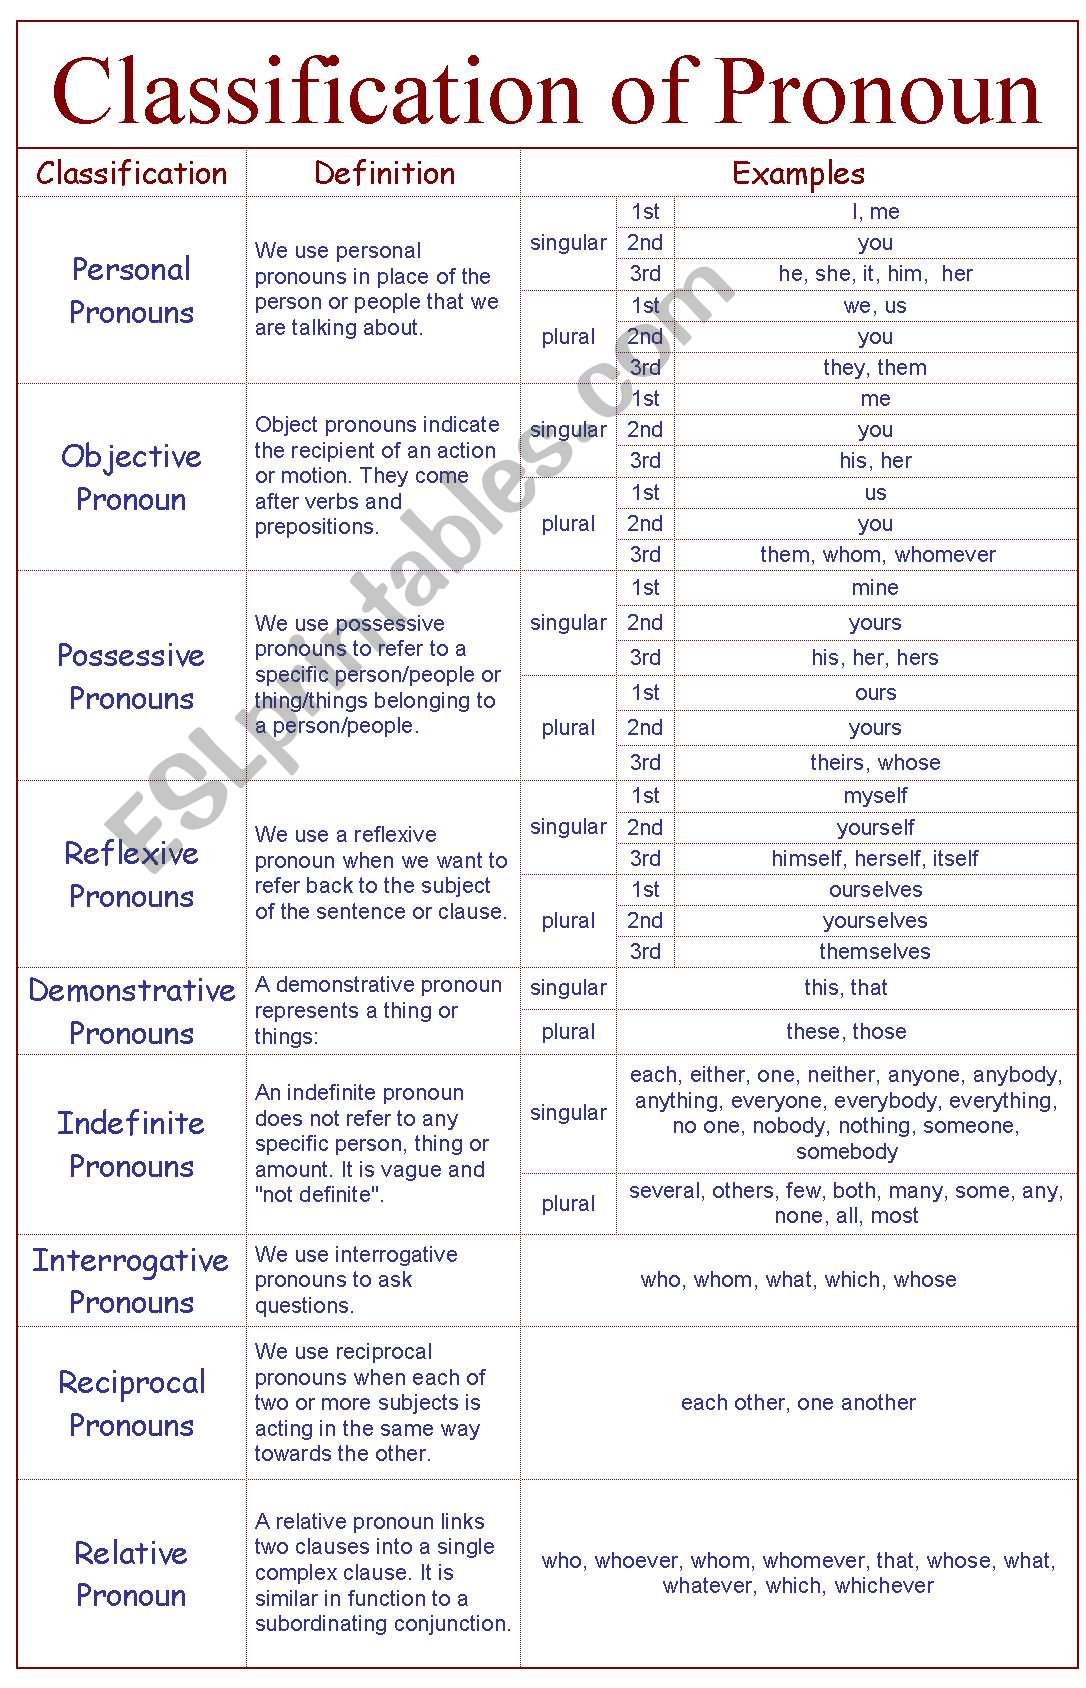 Classification of Pronoun worksheet